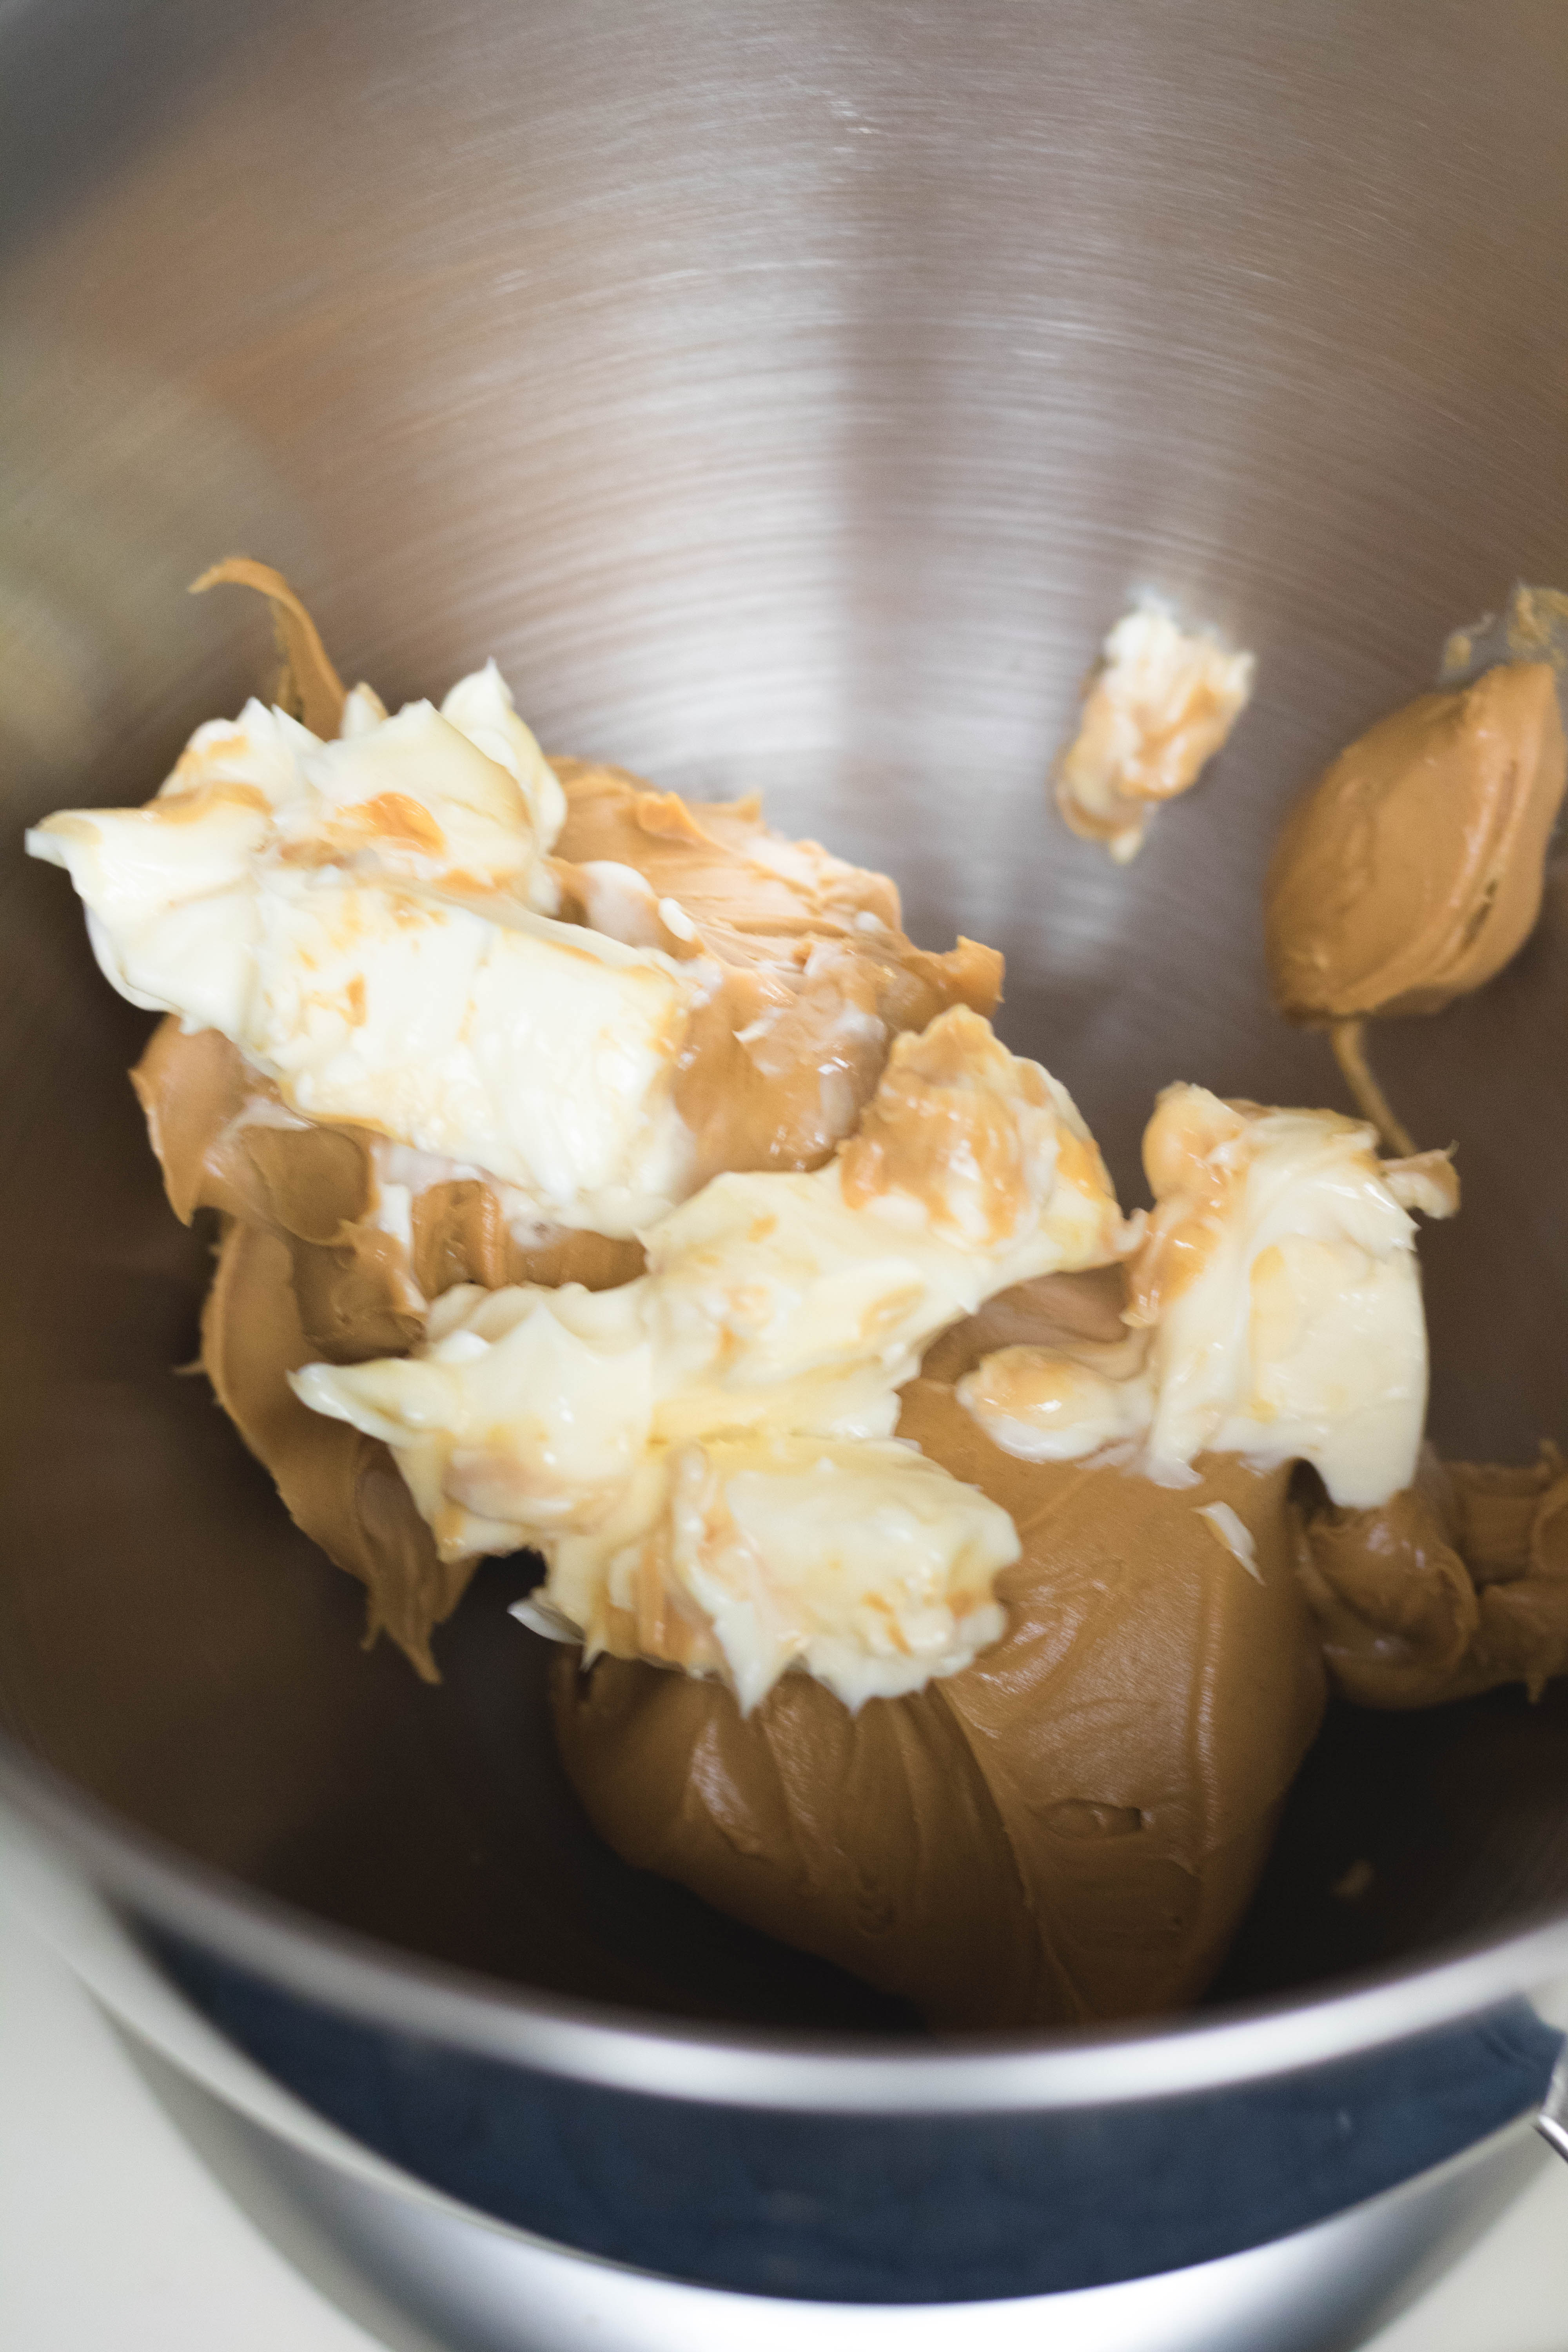 ingredients of peanut butter buckeye balls